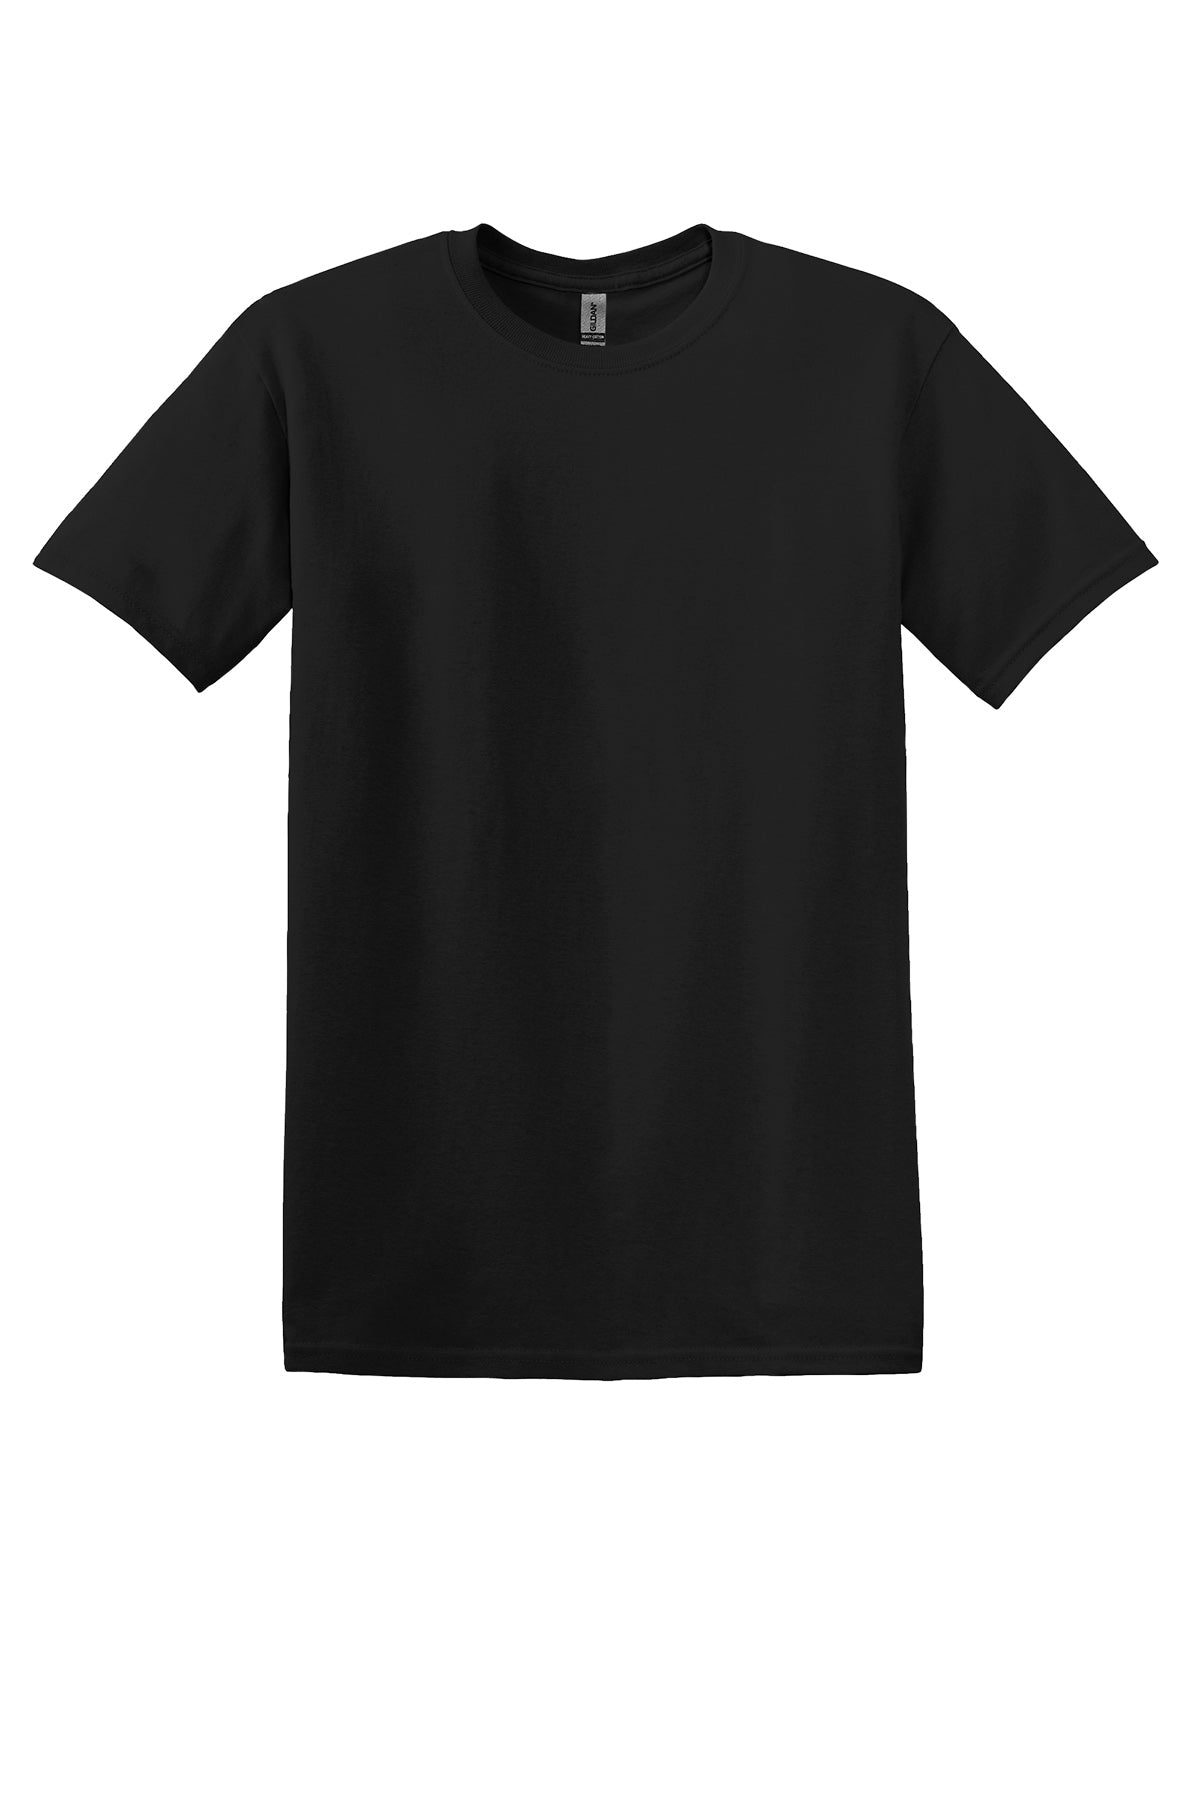 Gildan 5000 Adult T-Shirt Ad Small / Black